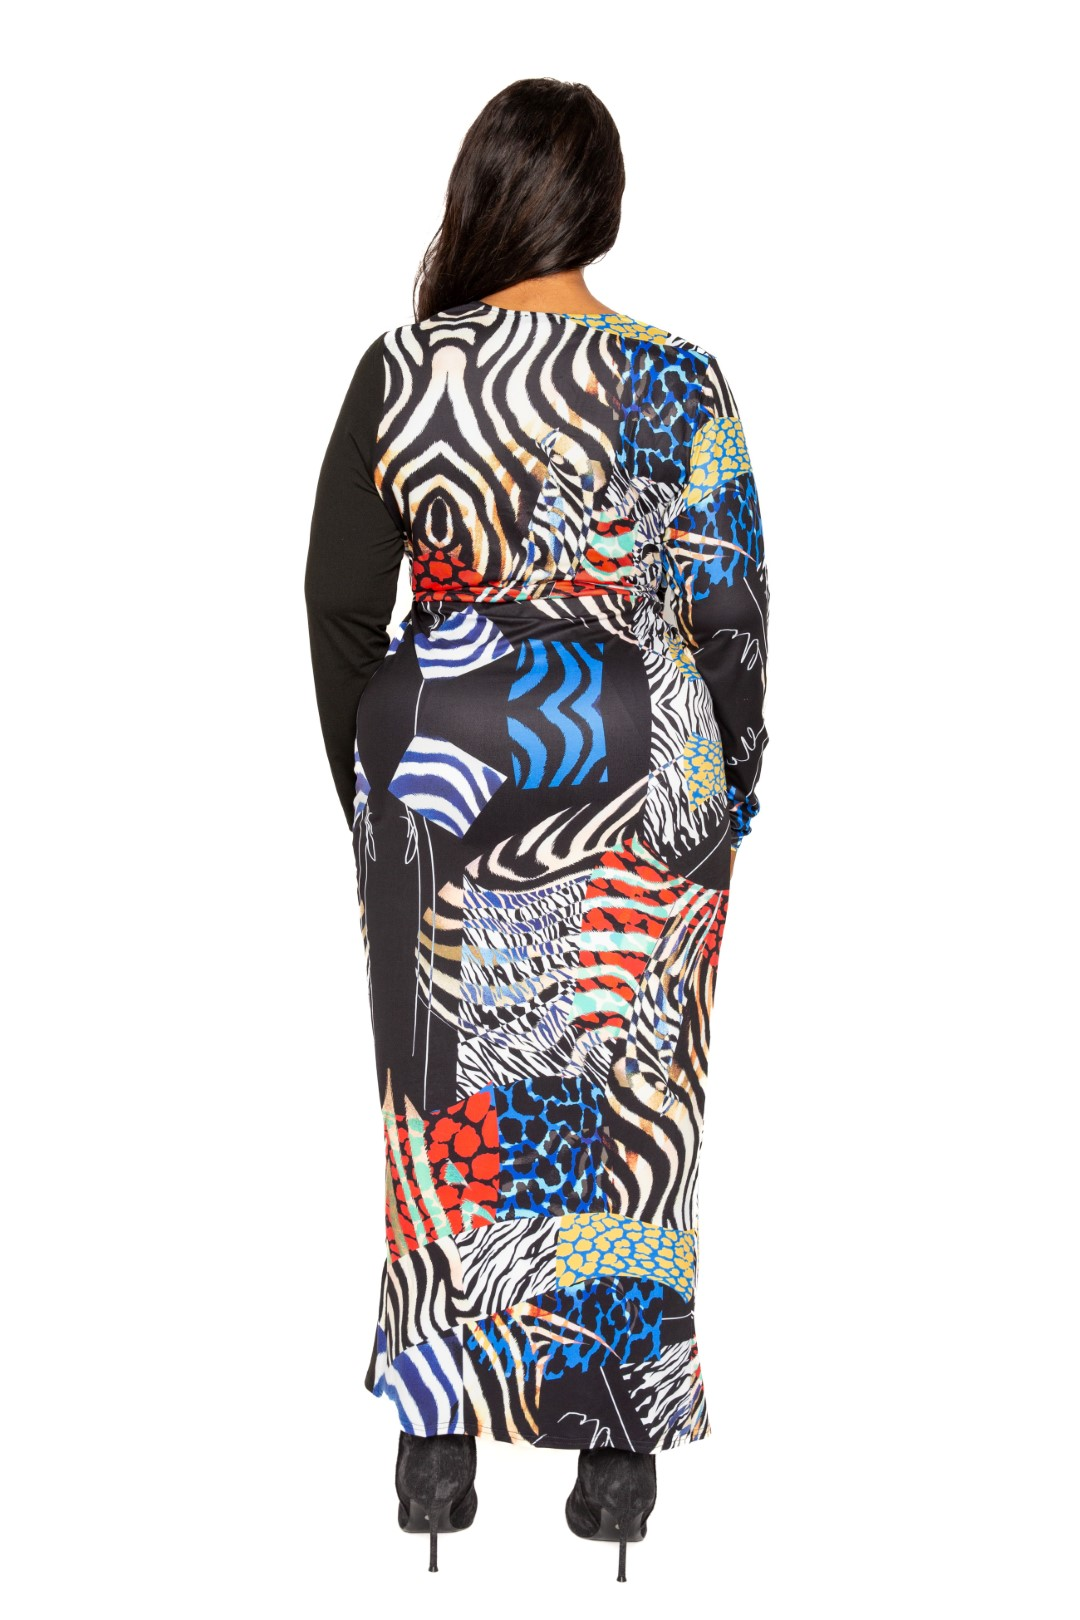 Animal Print Splice Dress With High-low Hem - lolaluxeshop